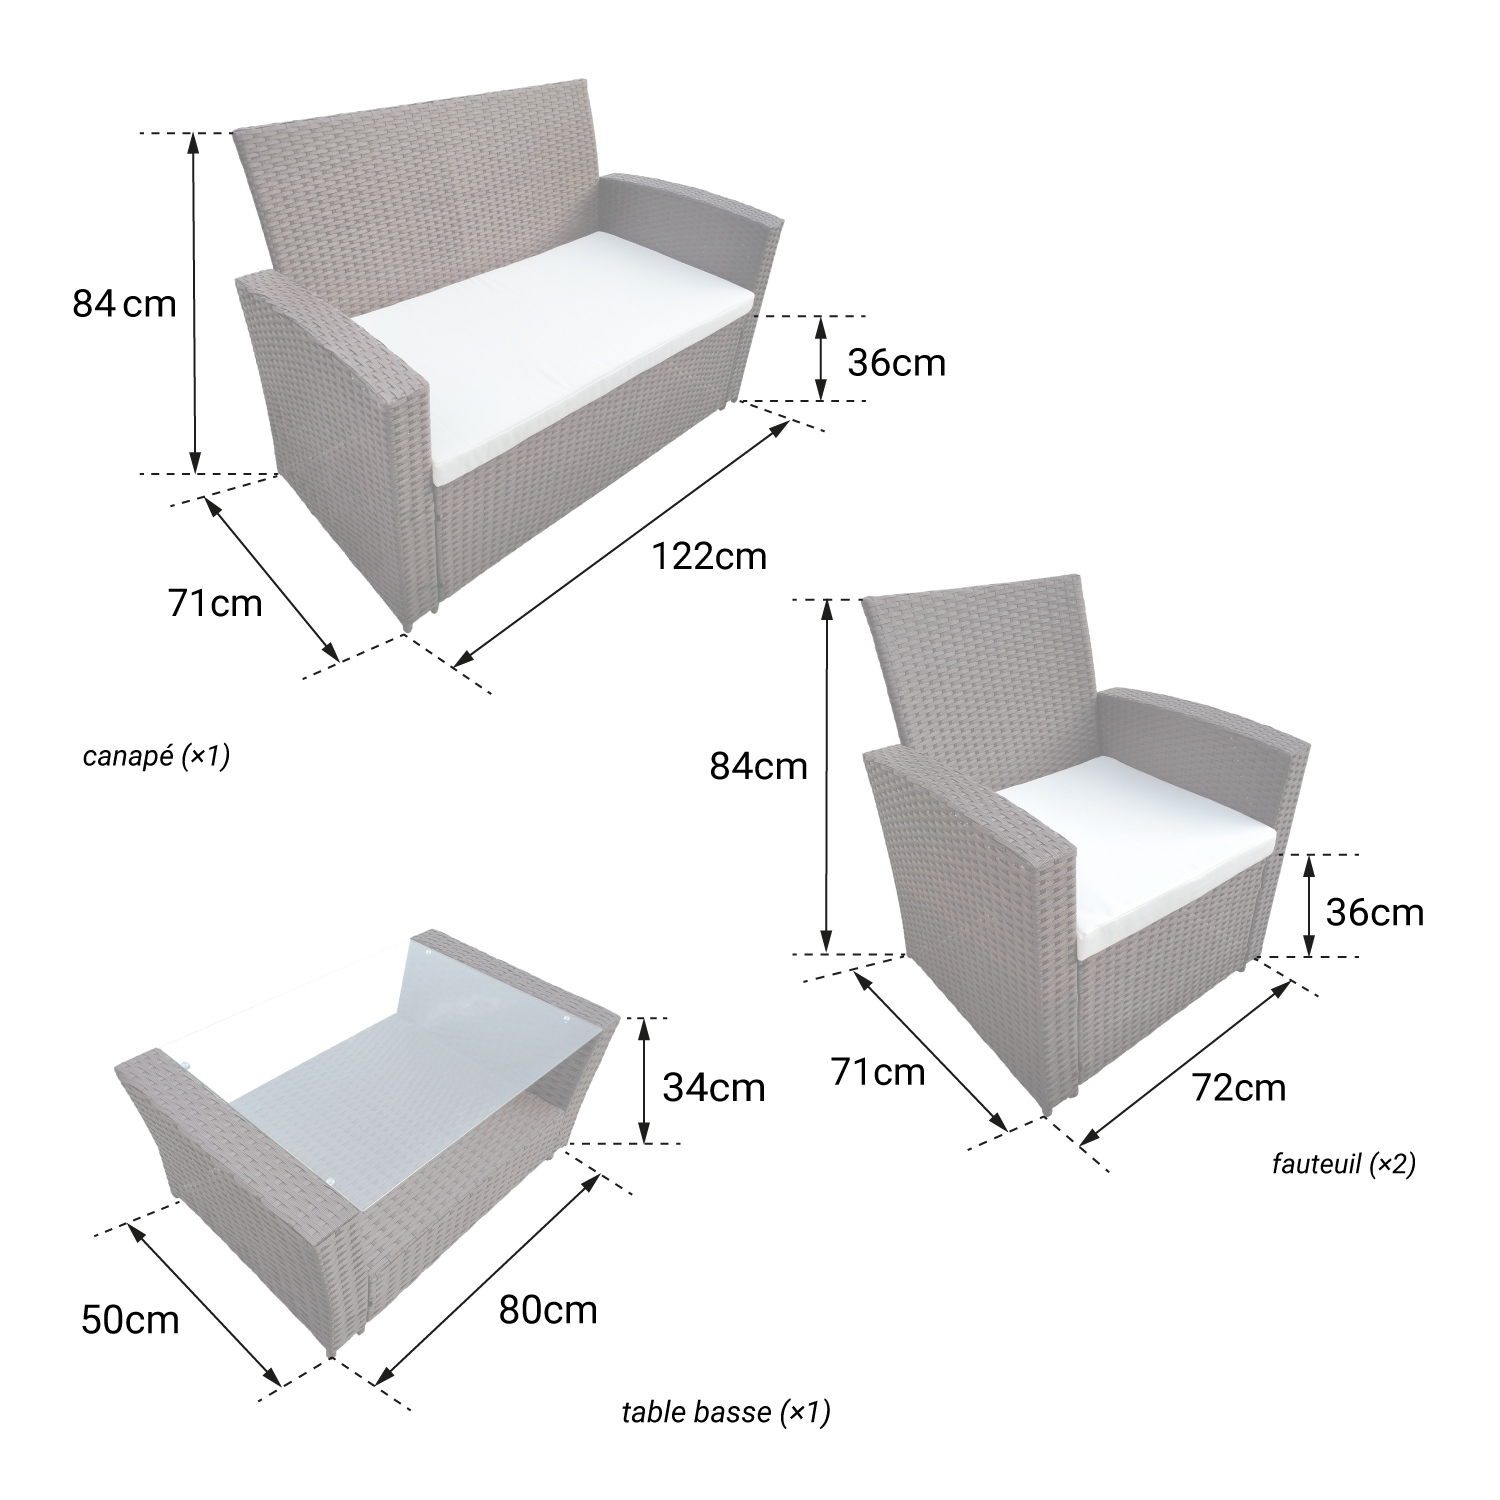 Gartenmöbel COMINO aus grauem Geflecht, 4 Sitzplätze - graue Kissen